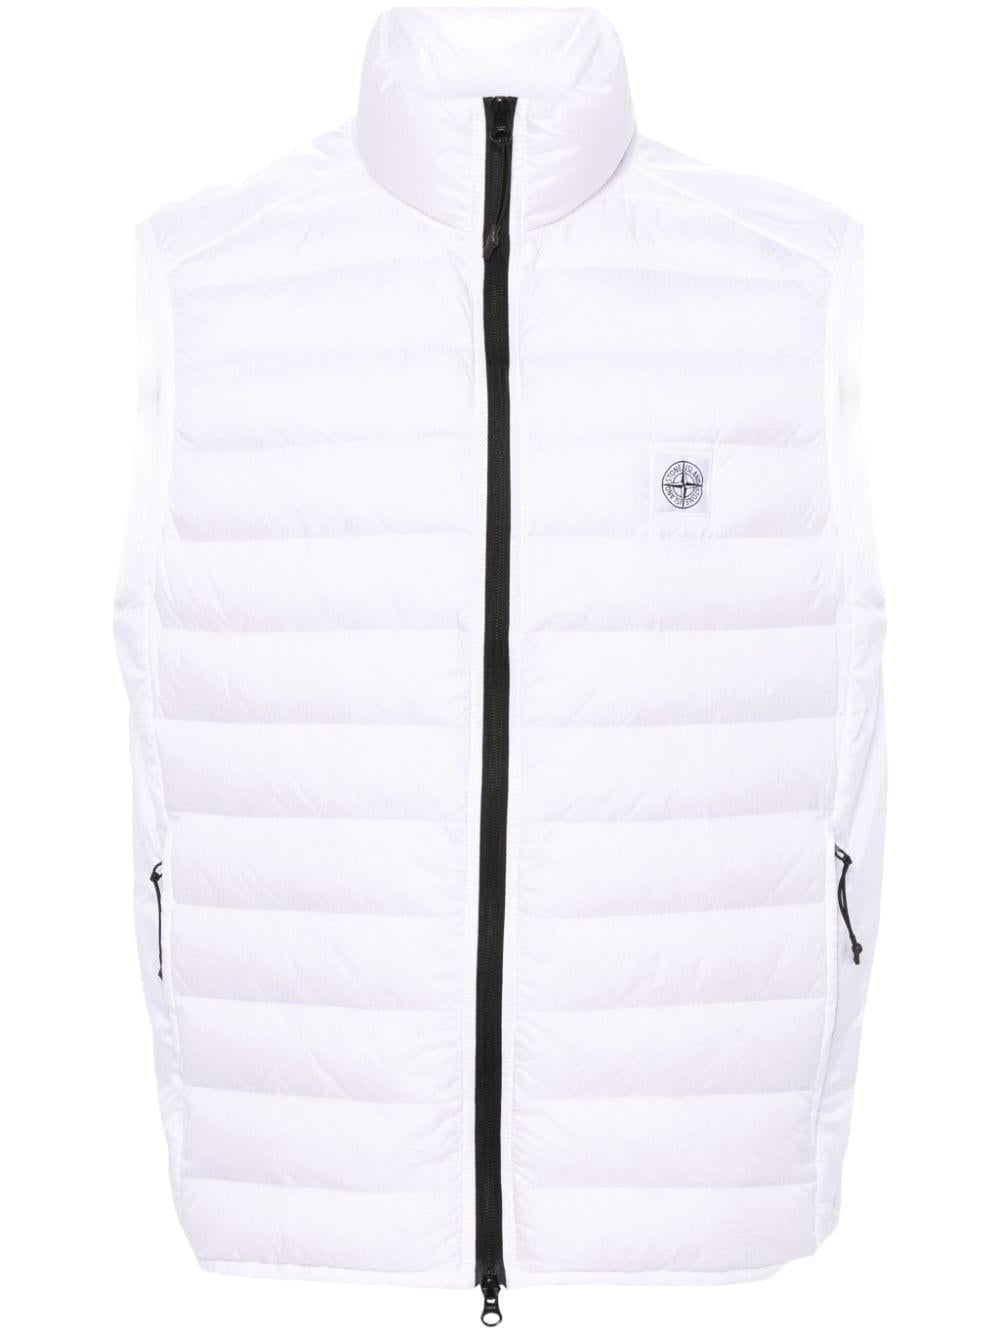 STONE ISLAND Lightweight Puffer Vest for Men in White